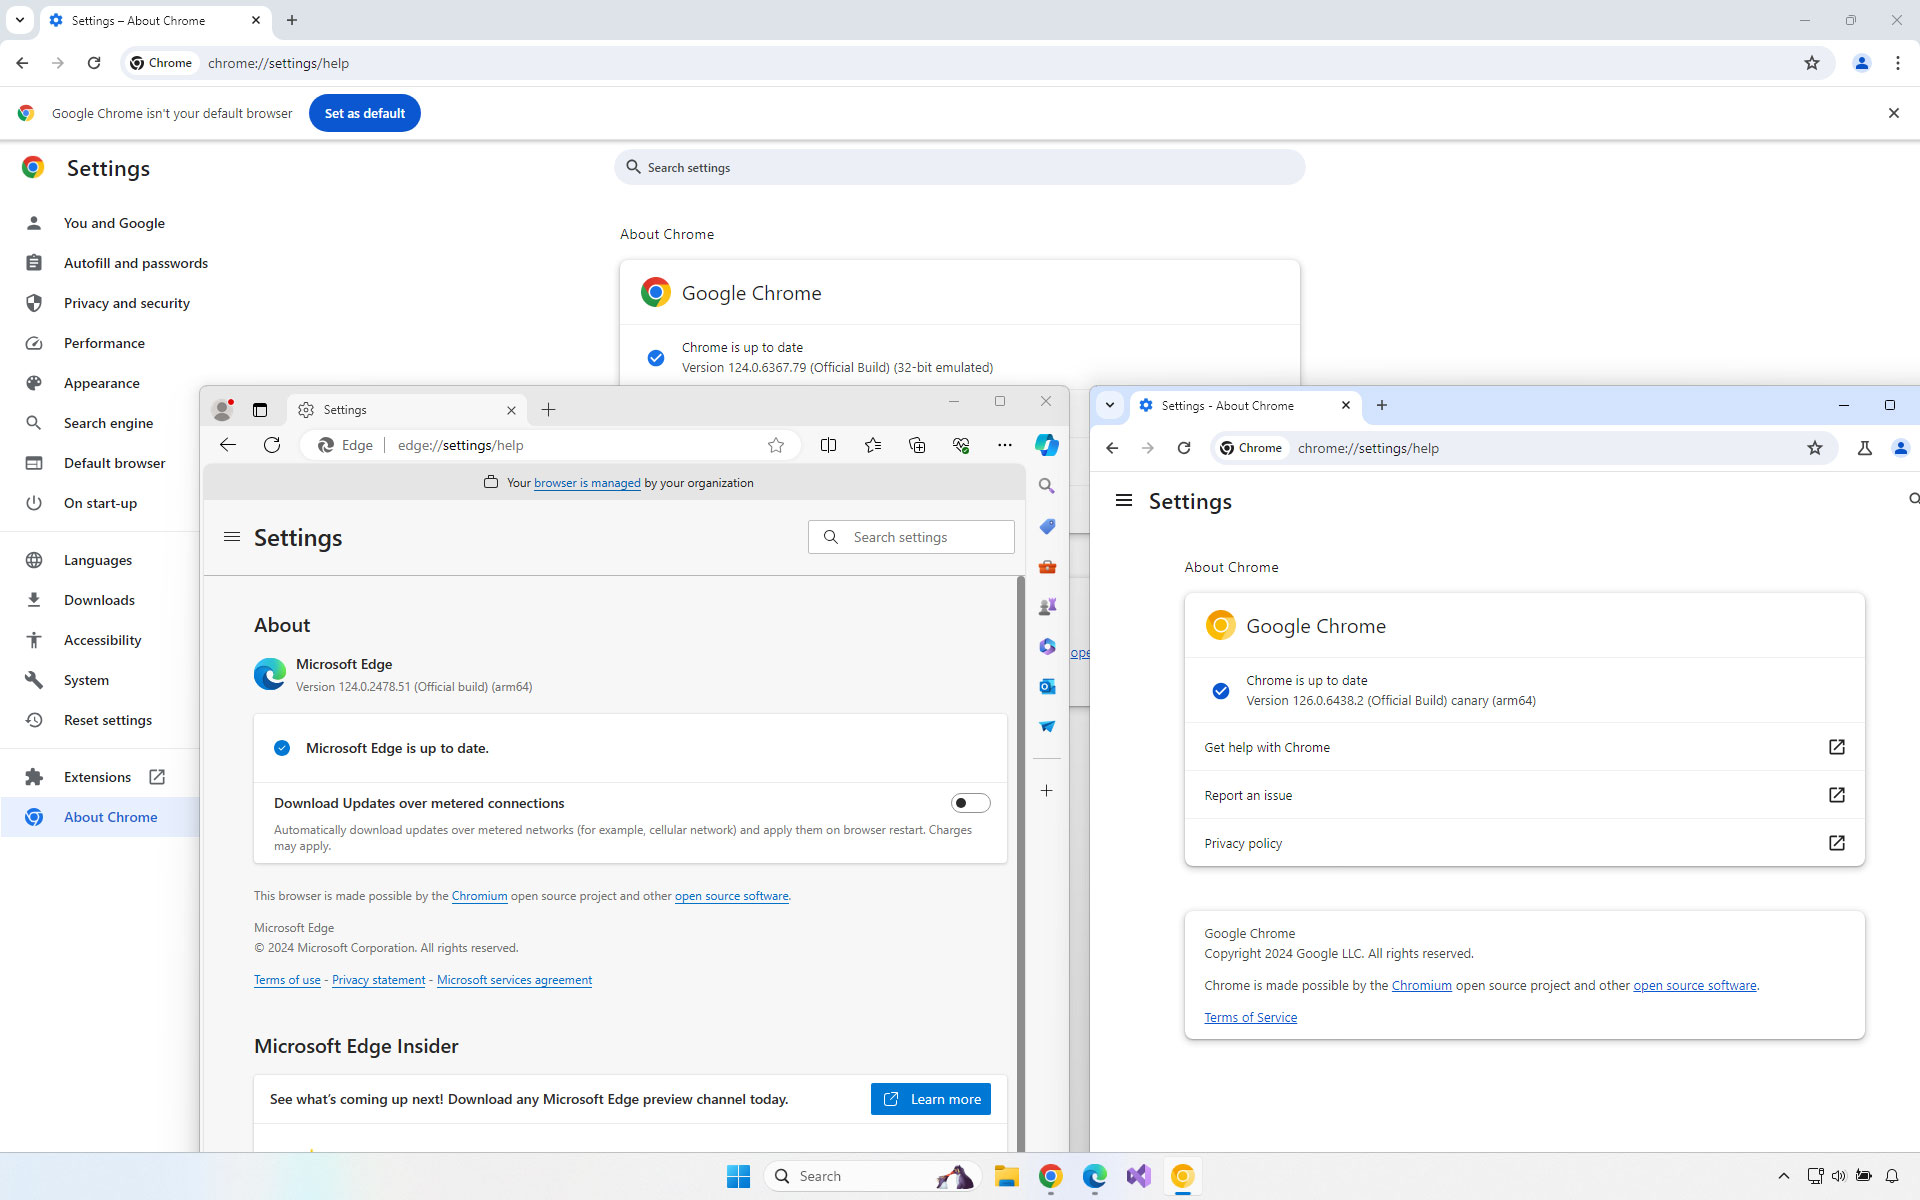 Microsoft Edge, Google Chrome, and Google Chrome Canary